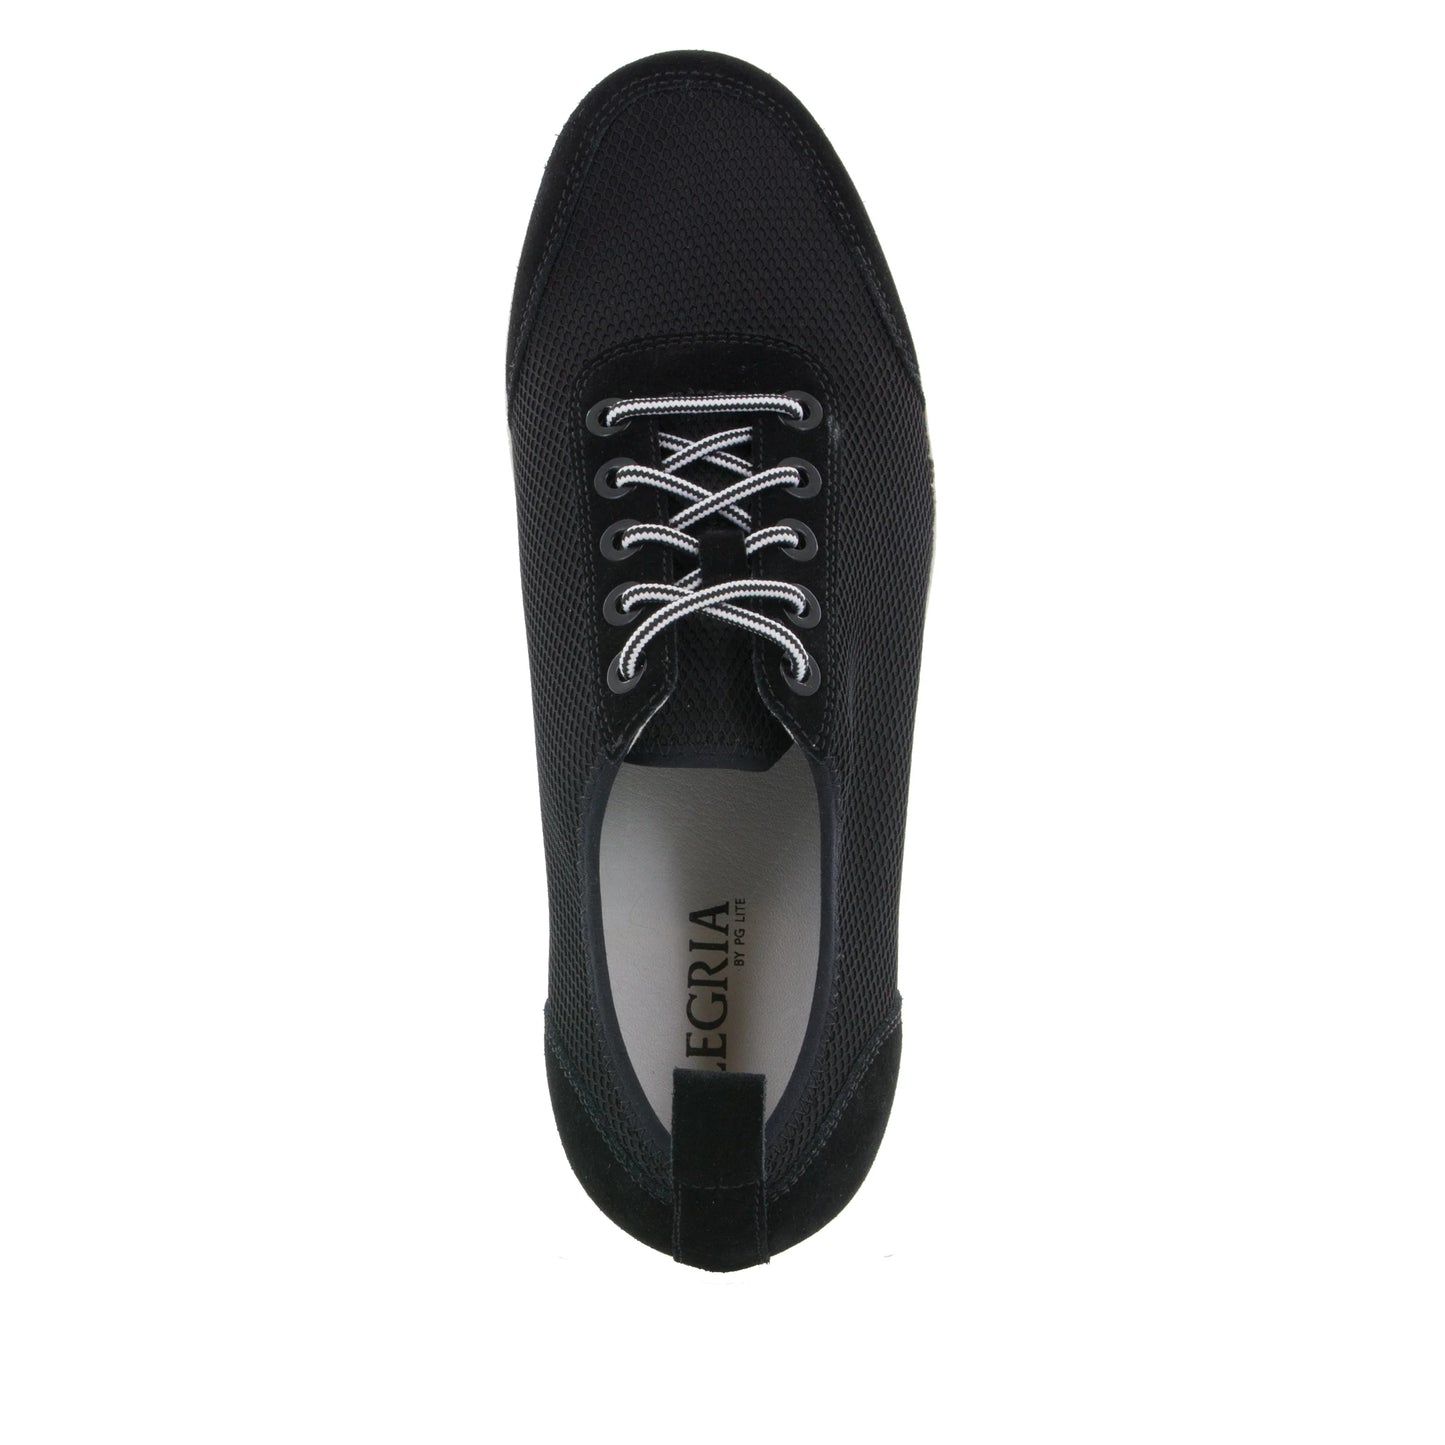 Alegria Men's Stretcher Shoe - Black